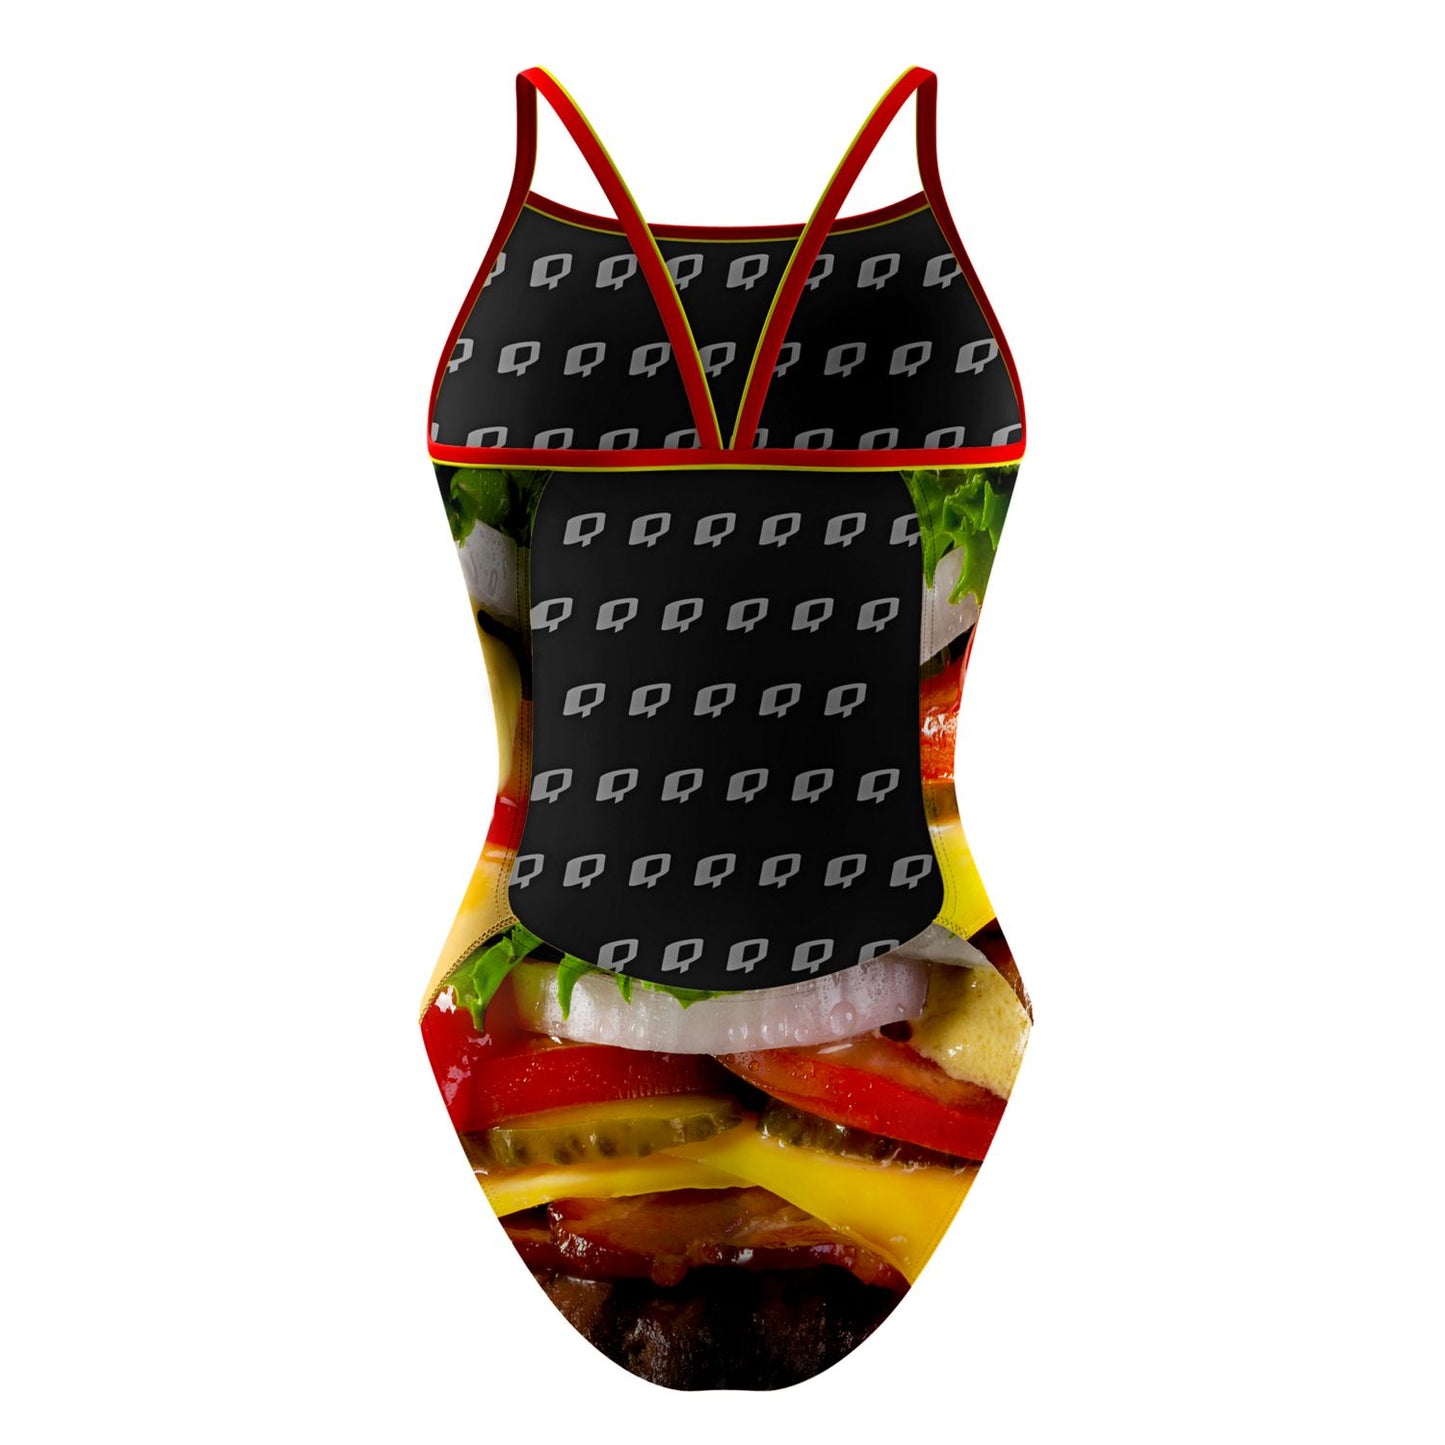 Hamburger - Sunback Tank Swimsuit